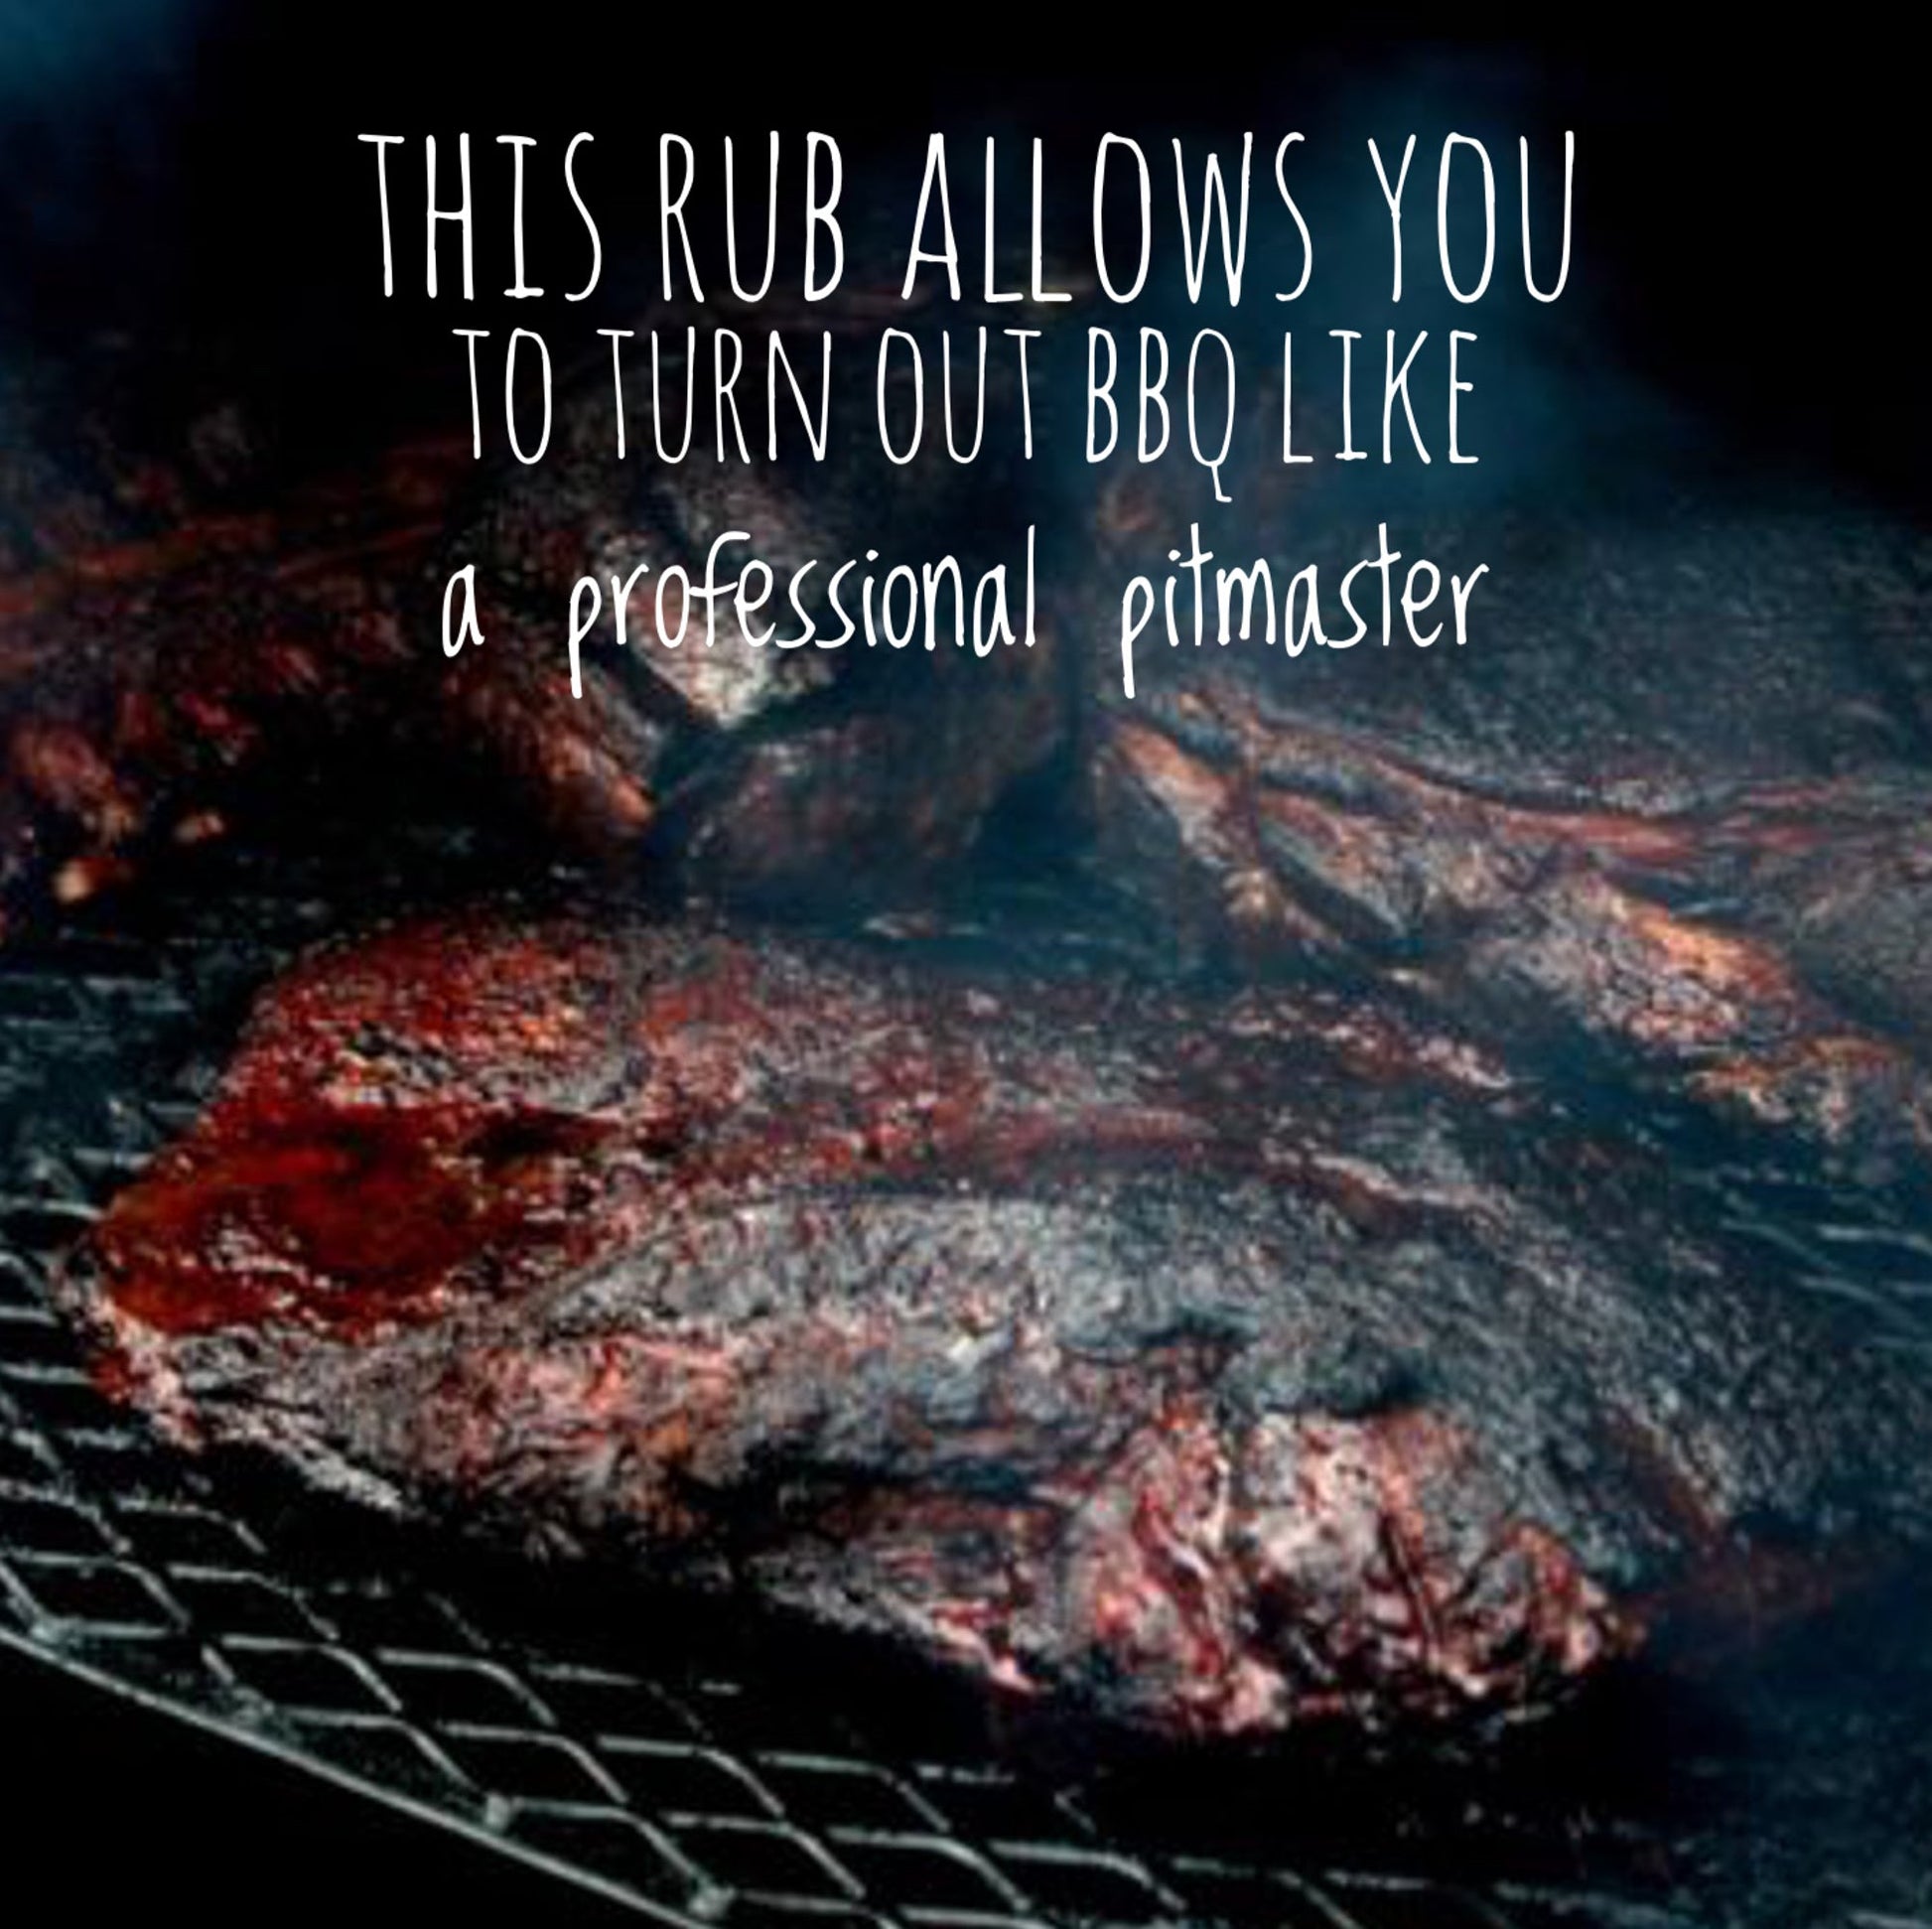 Oh Mama! BBQ Rub Savory Blend the Killer Rub great on Hogs Chicken Pork Chops Steaks Ribs Brisket Butt - Best Barbecue Butt Rub - Meat Seasoning and Spice Dry Rub - Shaker Bottle (3.2)… - FlavorKicker.com